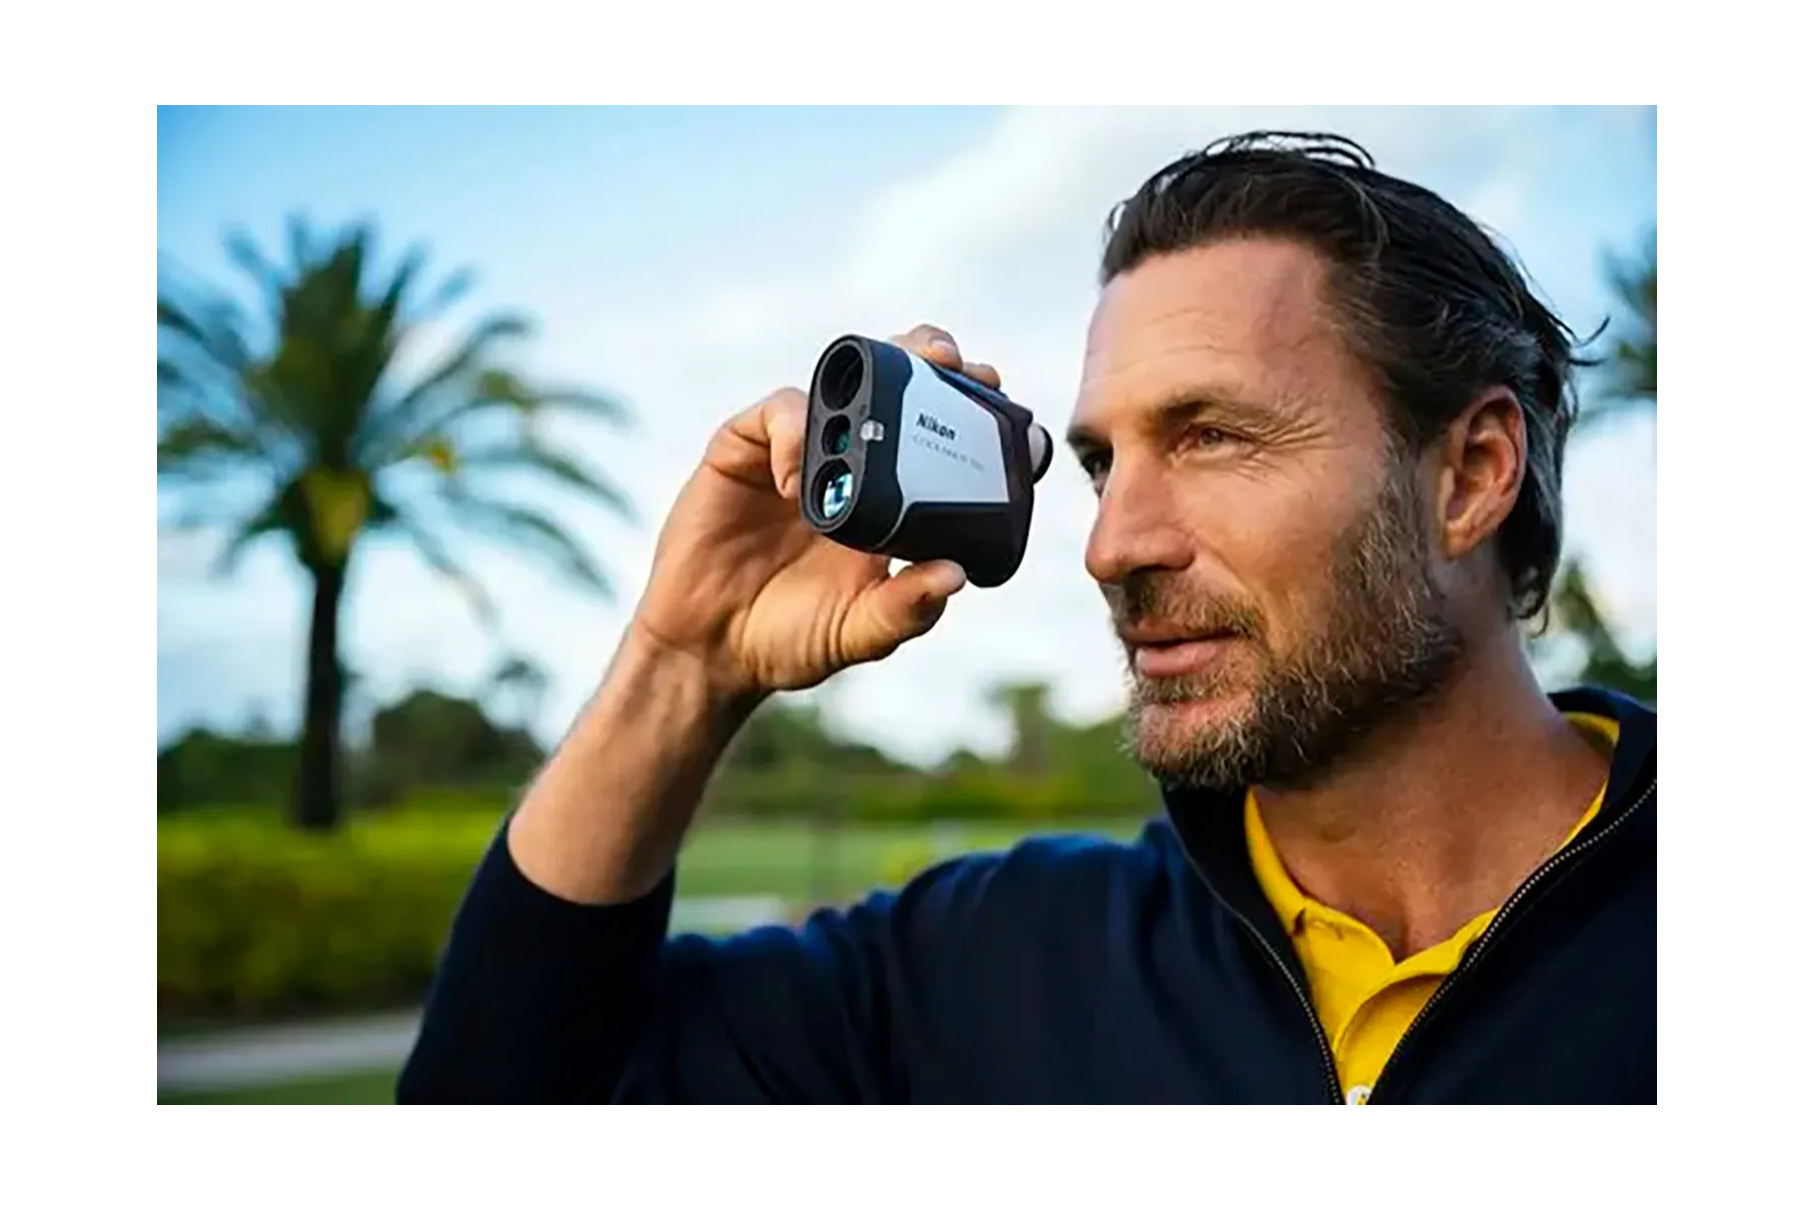 A golfer looking through the Nikon COOLSHOT 50i golf laser rangefinder on the golf course